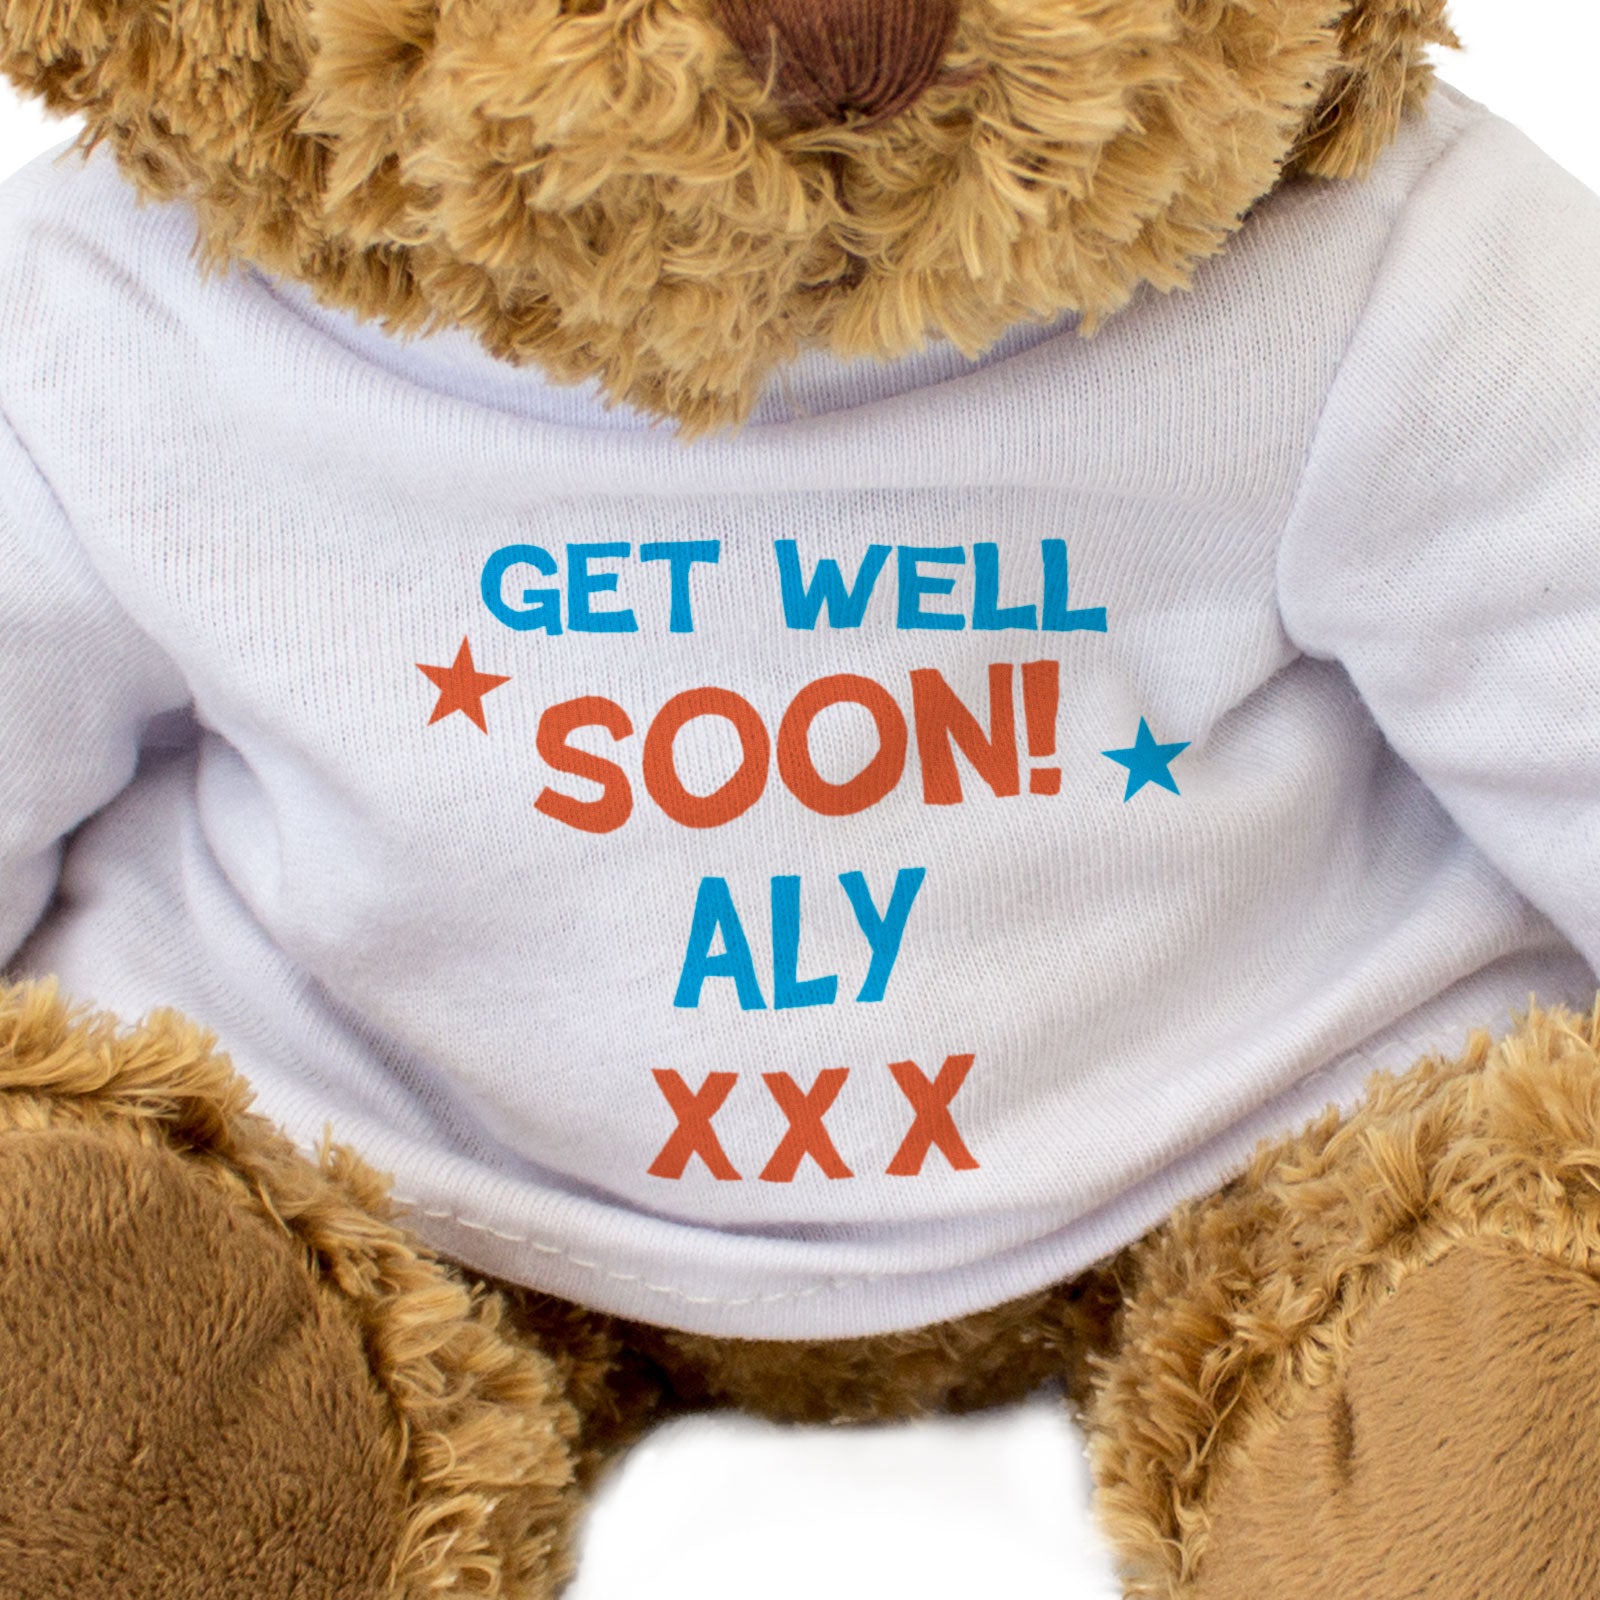 Get Well Soon Aly - Teddy Bear